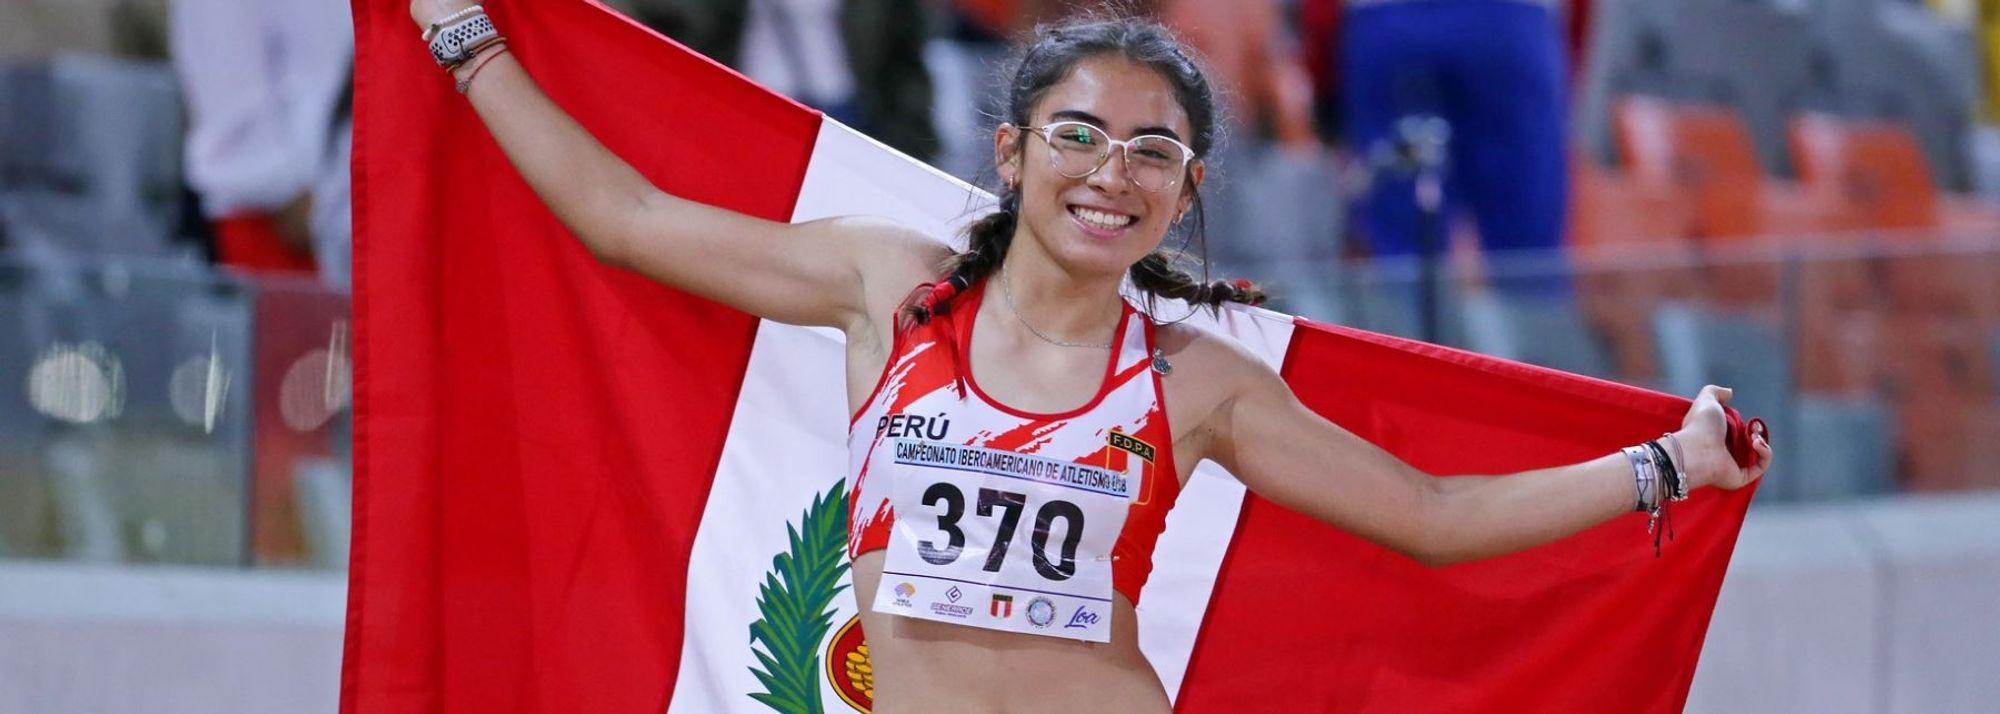 Cayetana Chirinos shone in the 100m at the Pedro Galvez Velarde South American Grand Prix